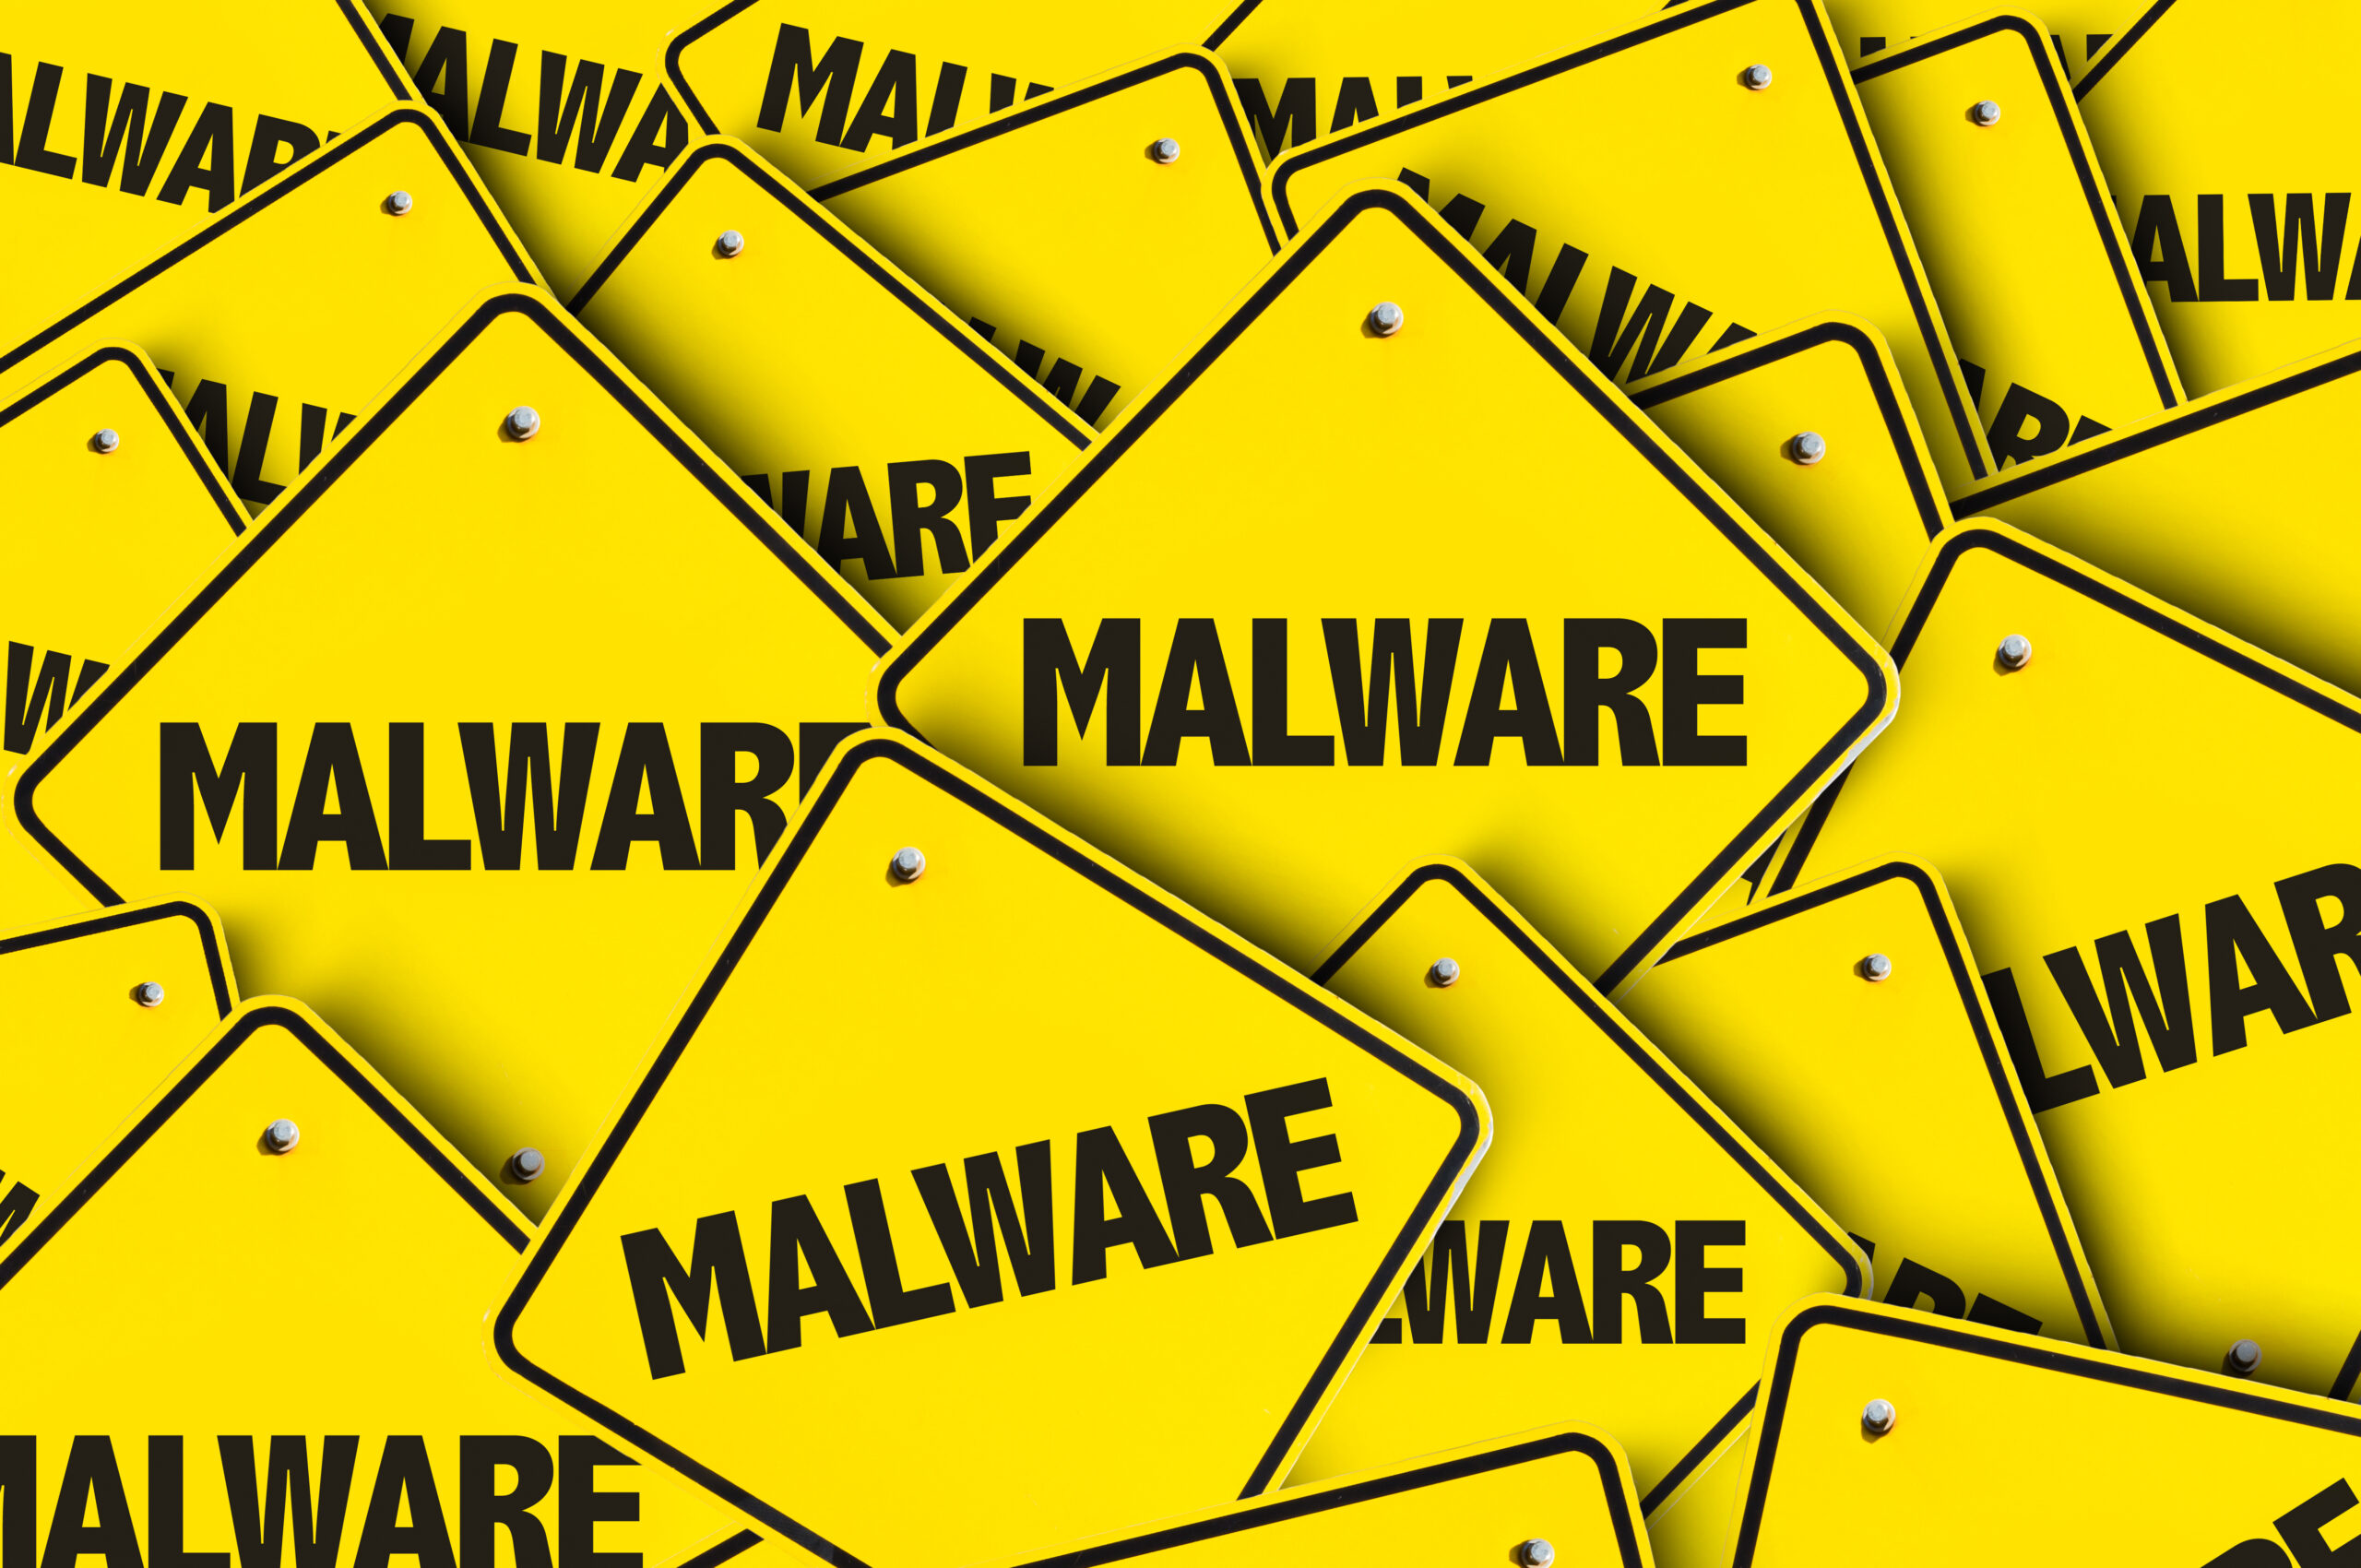 Warning! The rise of smart malware attacks